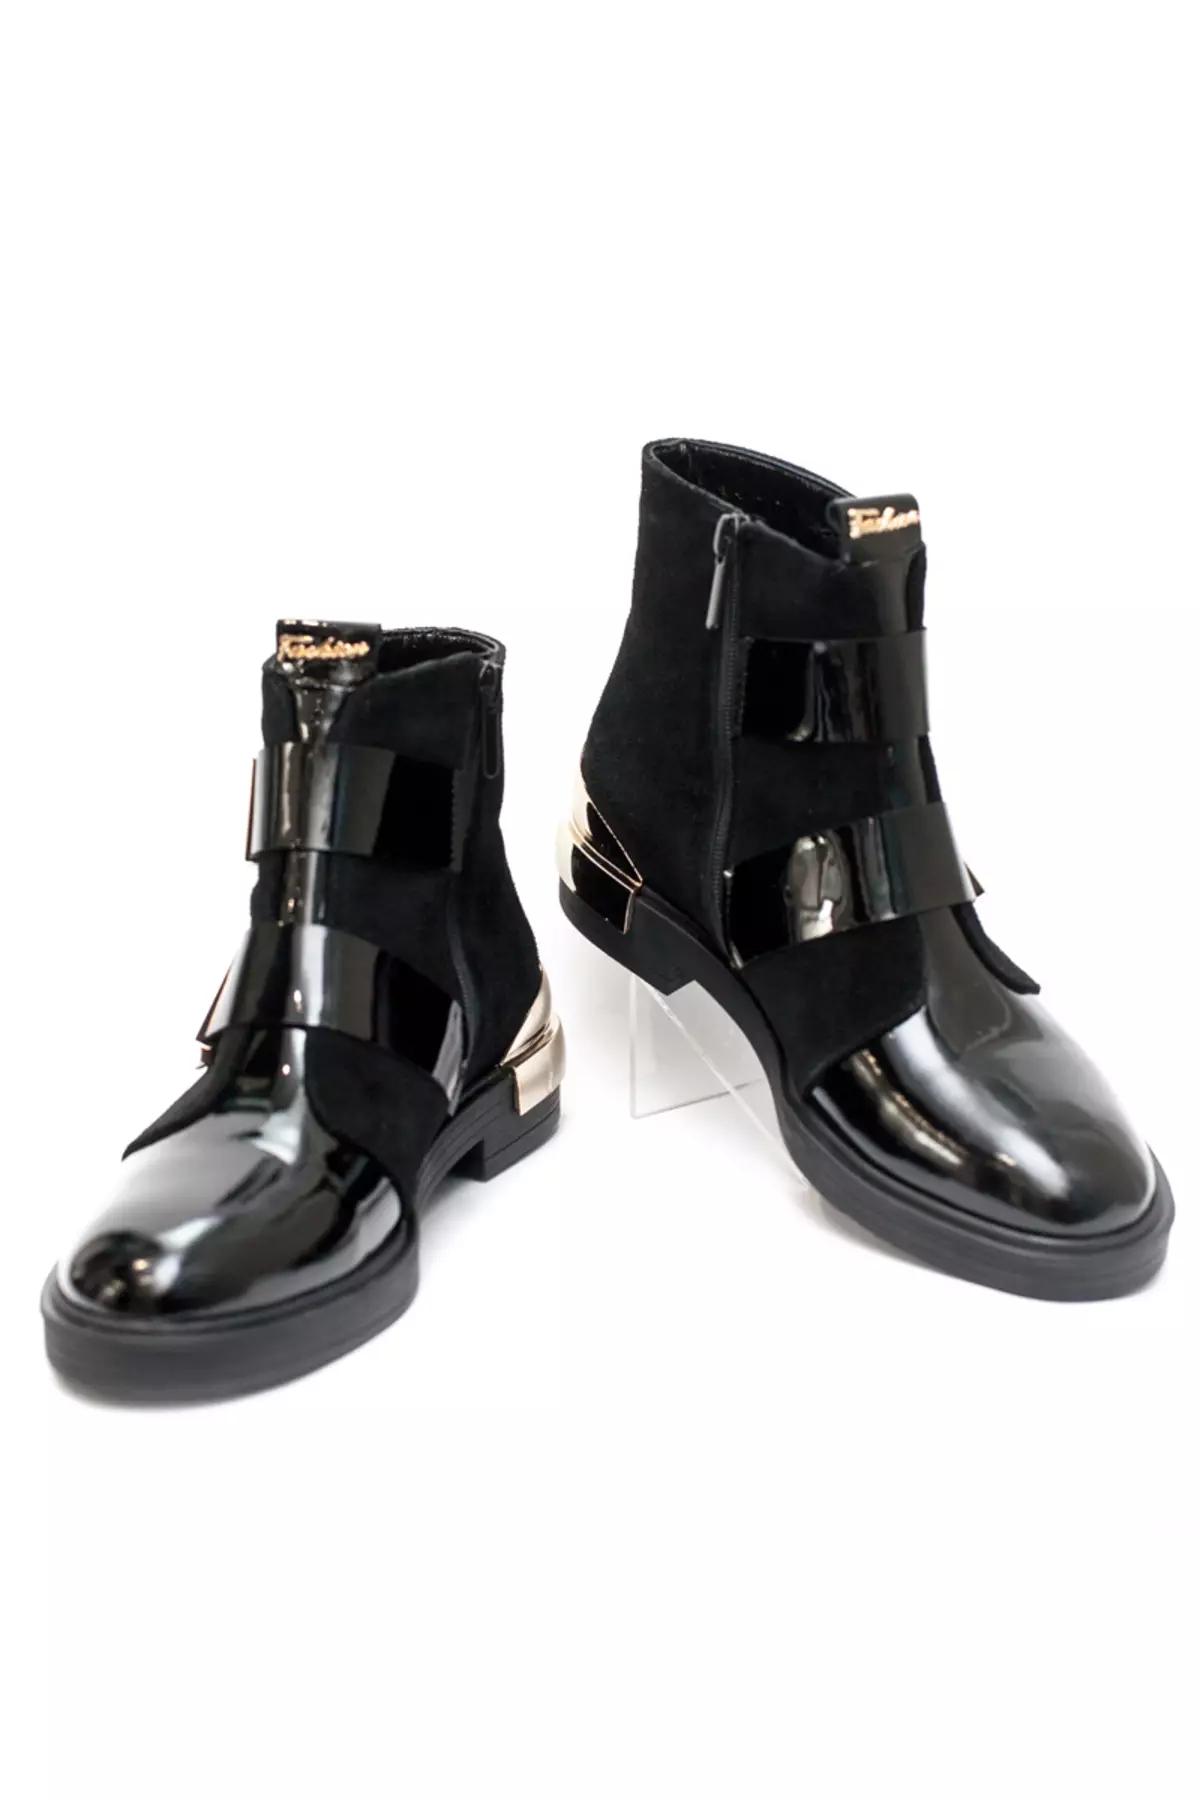 Boots (135 wêne): Trendên Fashion 2021, ji Rock Rock, Eva, Camel, Grinders, How to Wear Derby With Jeans, Mîlîtar & Burgundy Style 1842_63